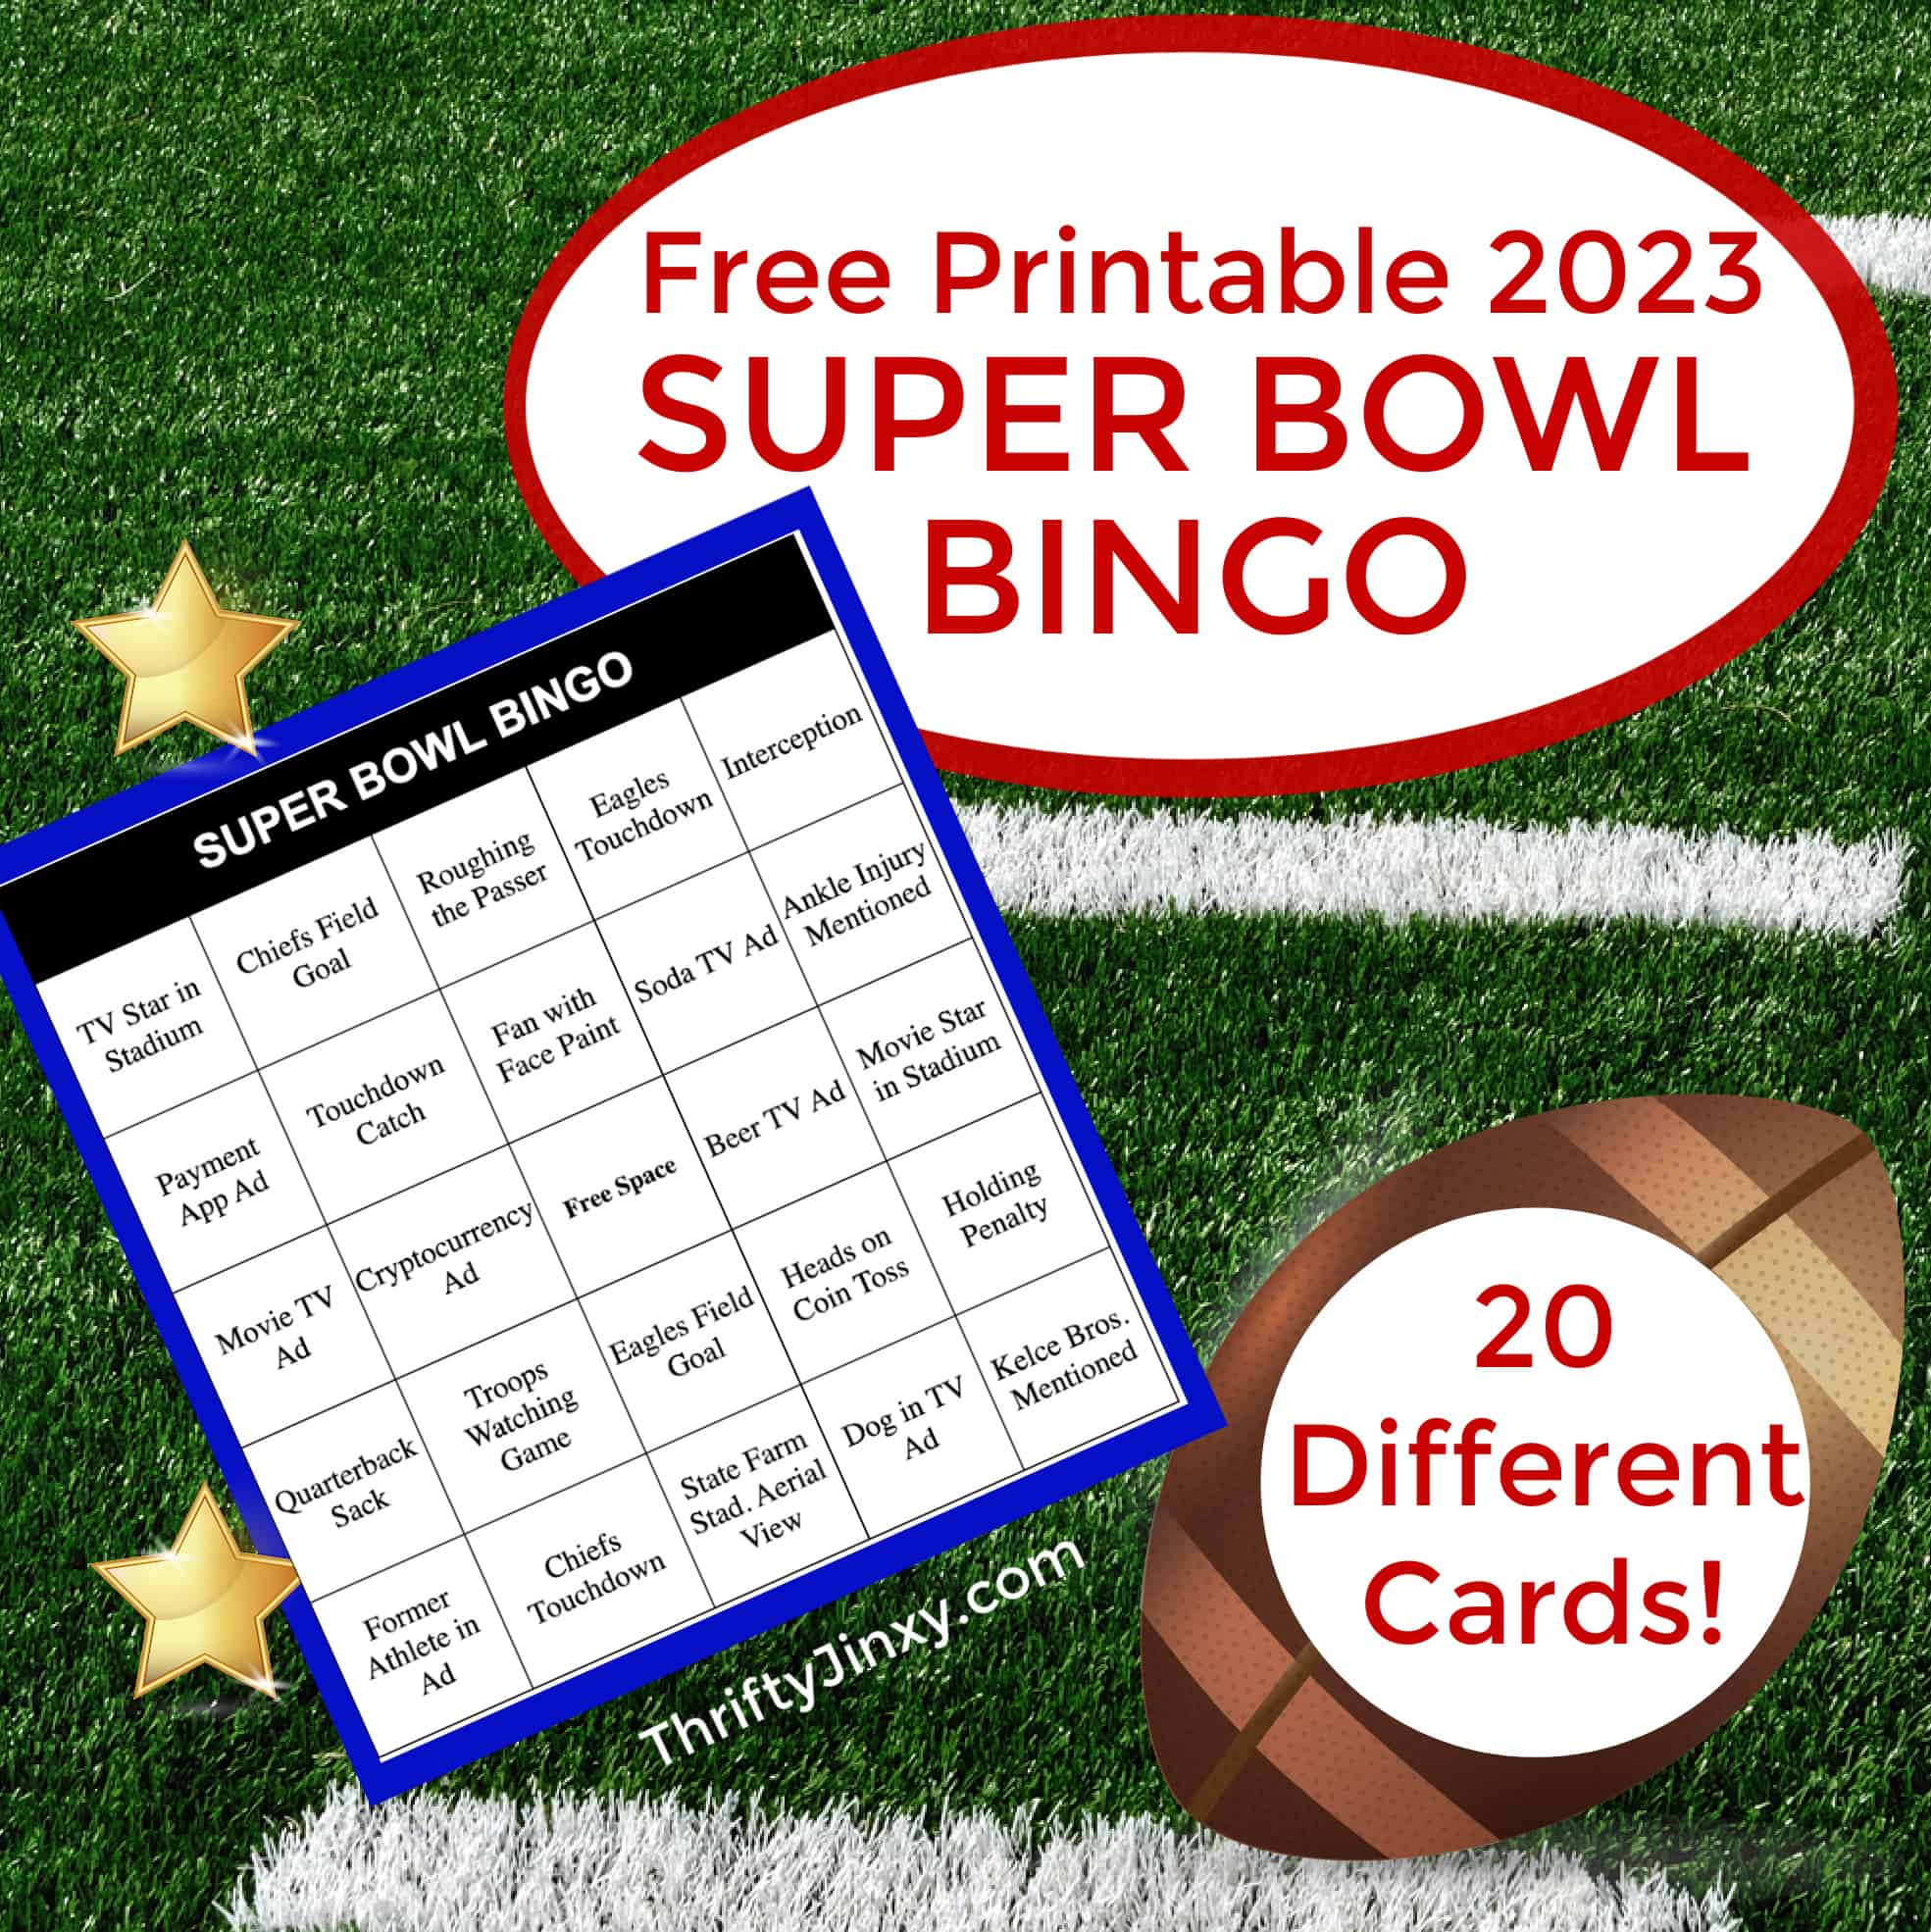 Best Printable Super Bowl Prop Bet Sheet 2023 for Your Super Bowl